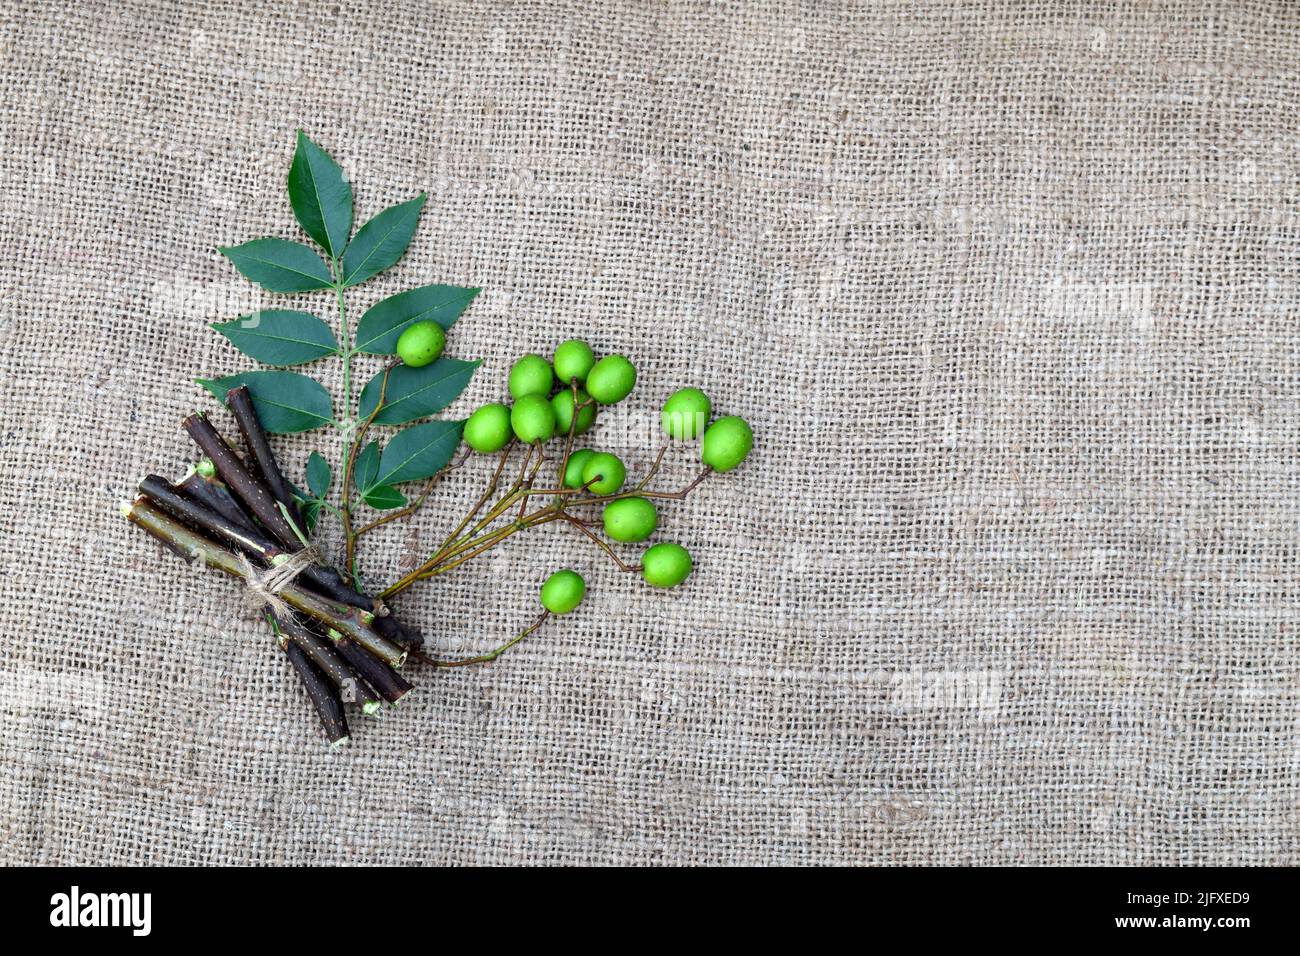 Neem foglie, frutta, e gambi su tessuto di iuta sfondo. Semi di neem medicinali, foglie, rami per l'omeopatia, materie prime tradizionali ayurveda Foto Stock